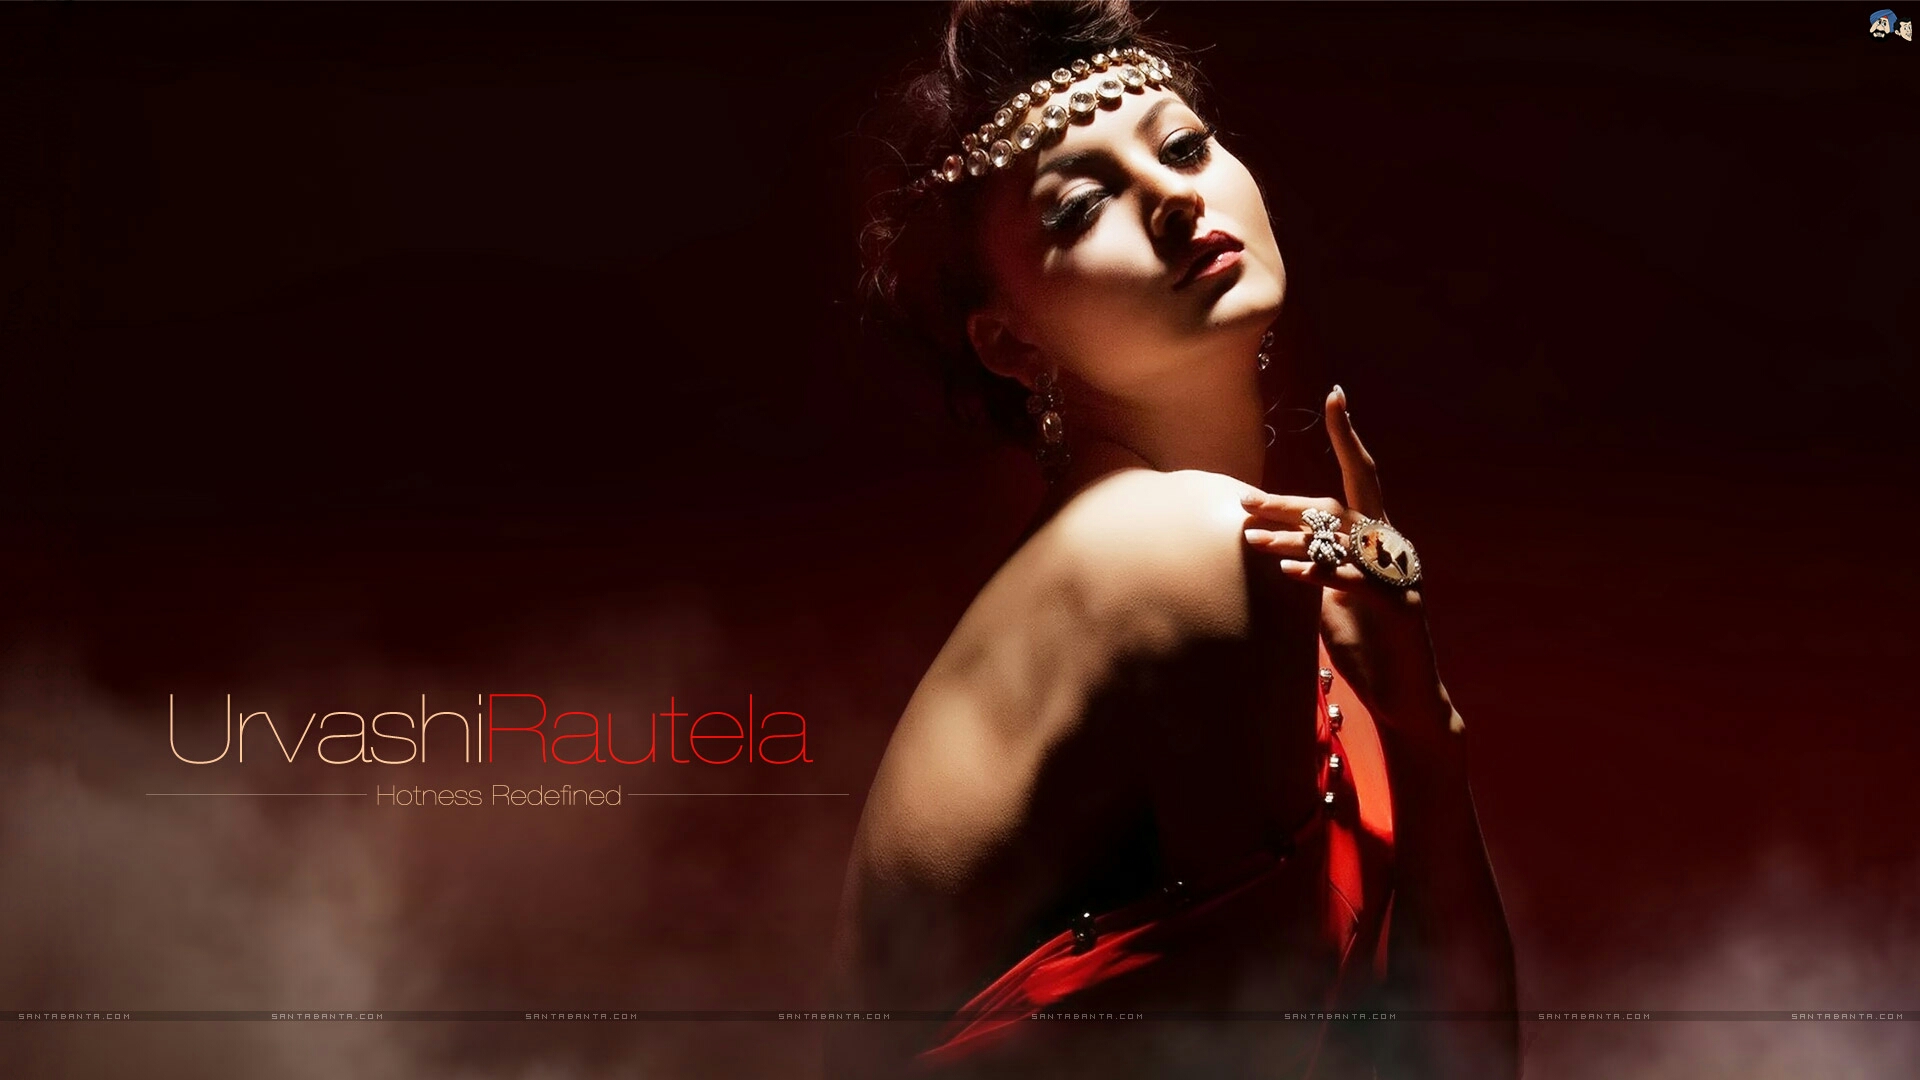 Urvashi Rautela - Hot And Sexy Photos Of Urvasi Rautela , HD Wallpaper & Backgrounds